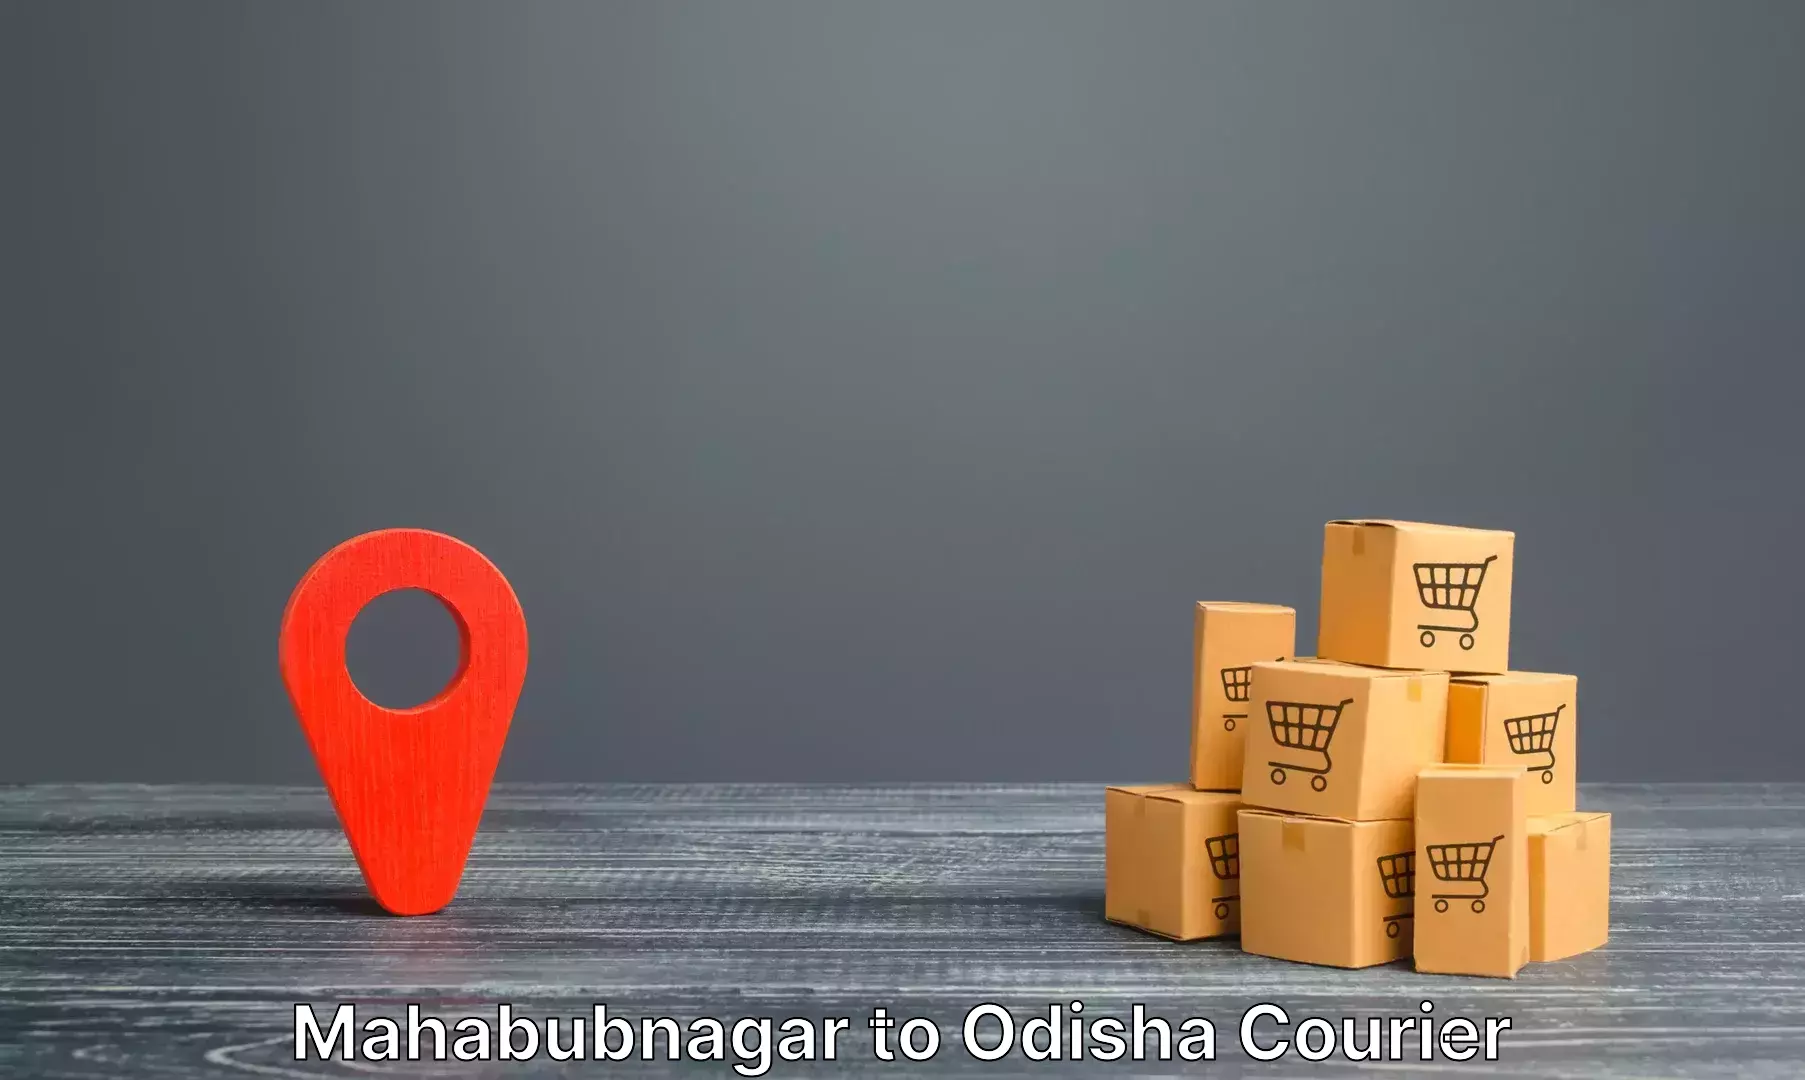 Luggage delivery network Mahabubnagar to Gunupur